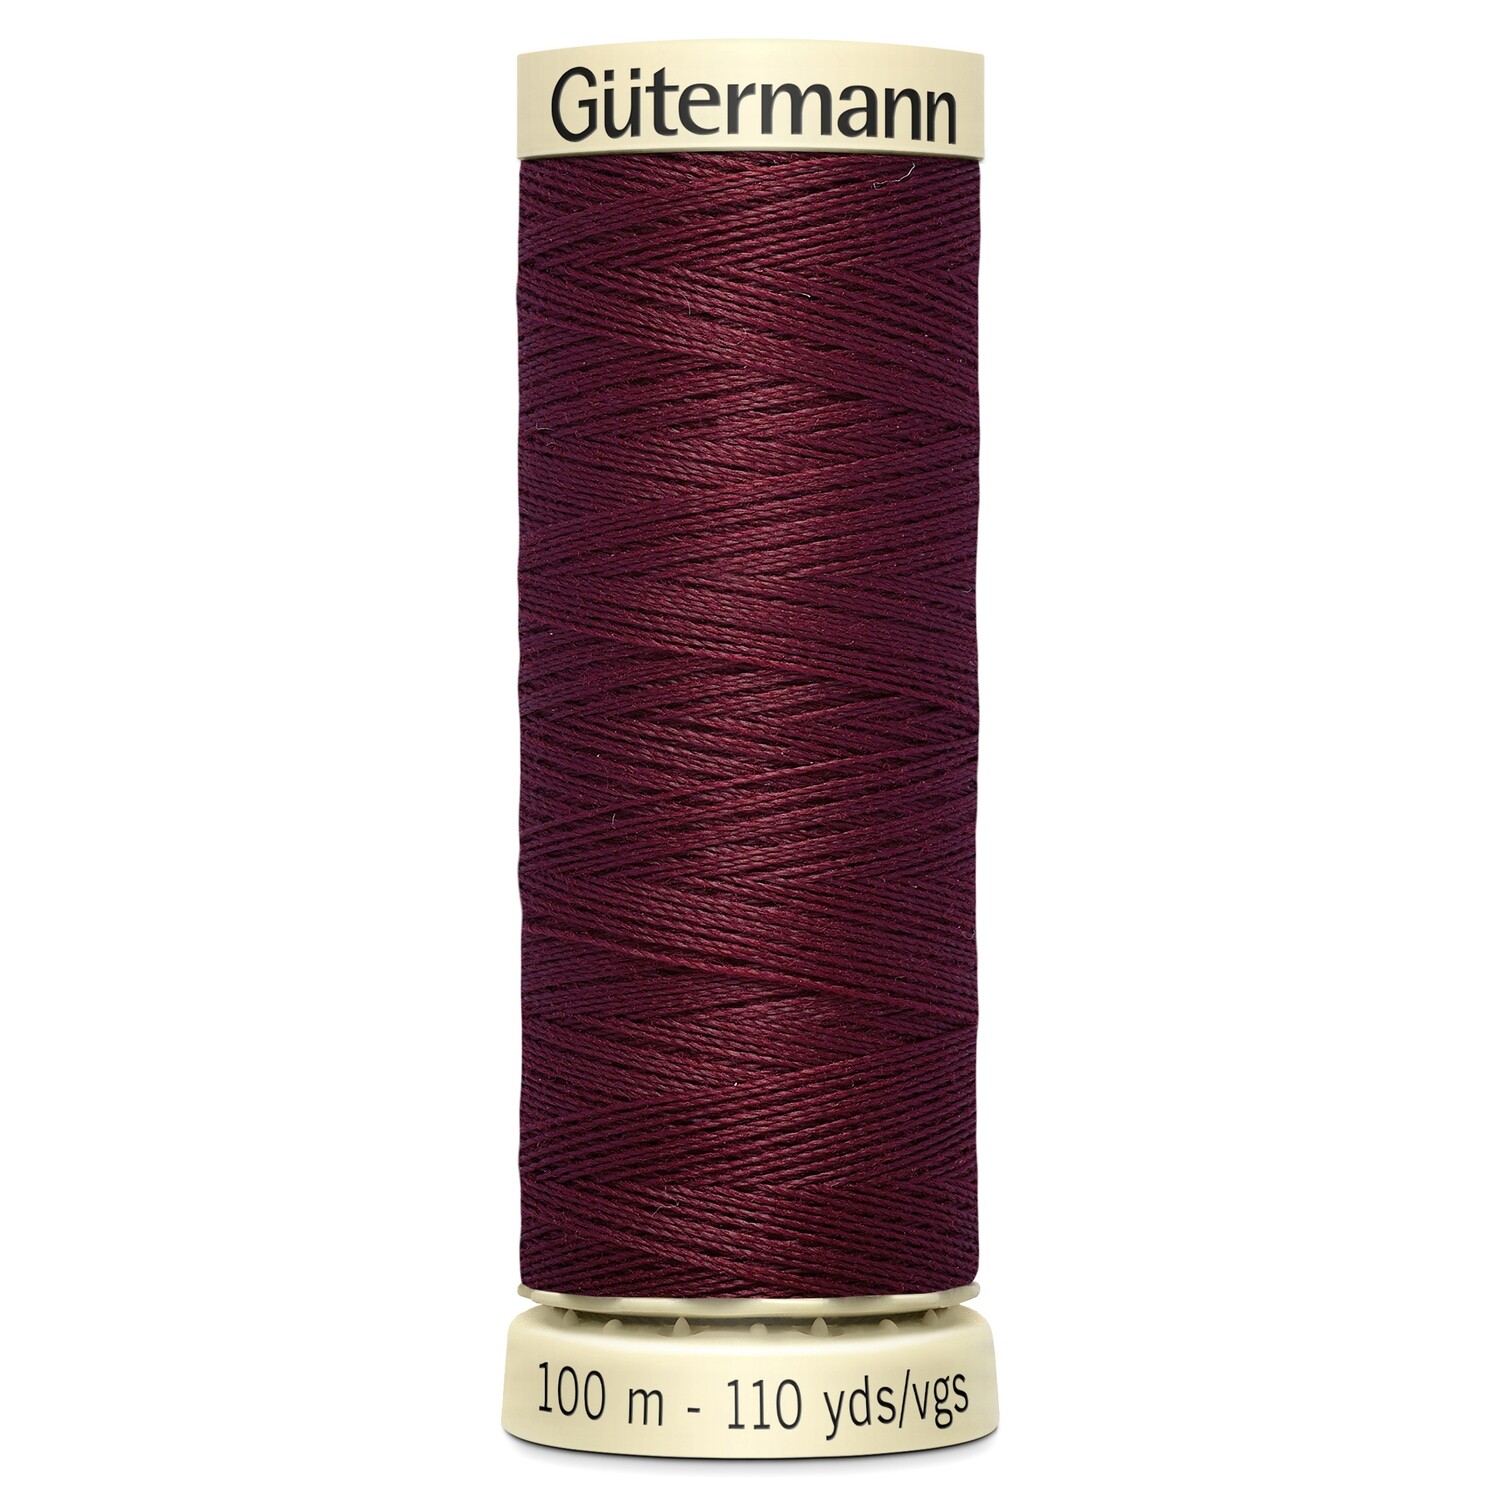 Gutermann Sew-All thread 369